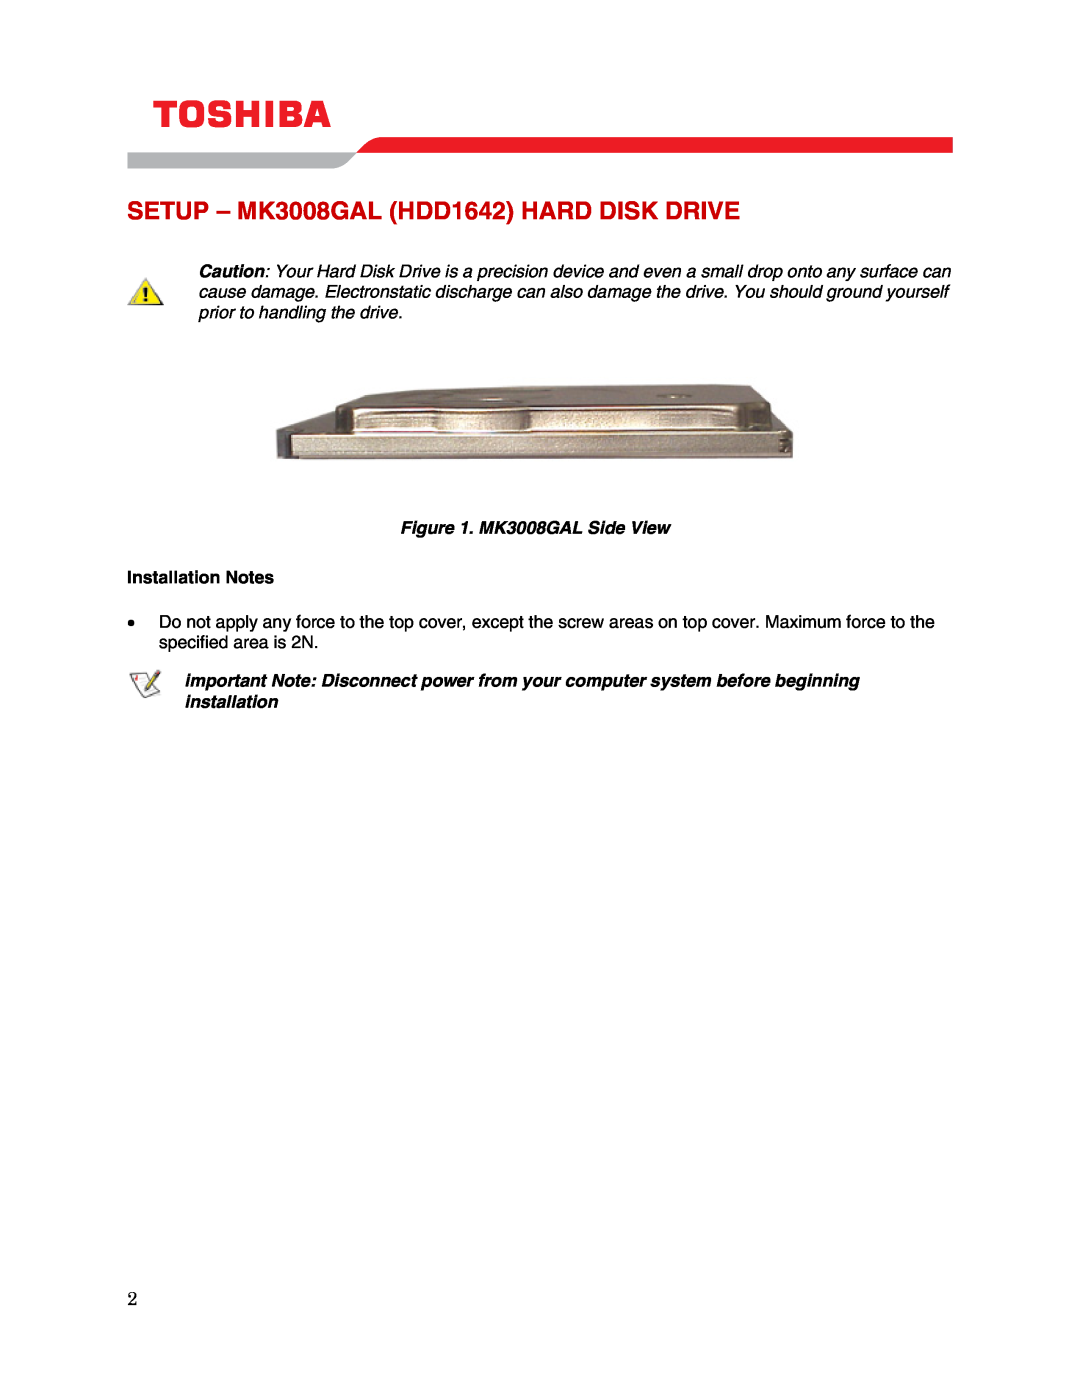 Toshiba MK3008GAL (HDD1642) user manual SETUP - MK3008GAL HDD1642 HARD DISK DRIVE, MK3008GAL Side View, Installation Notes 